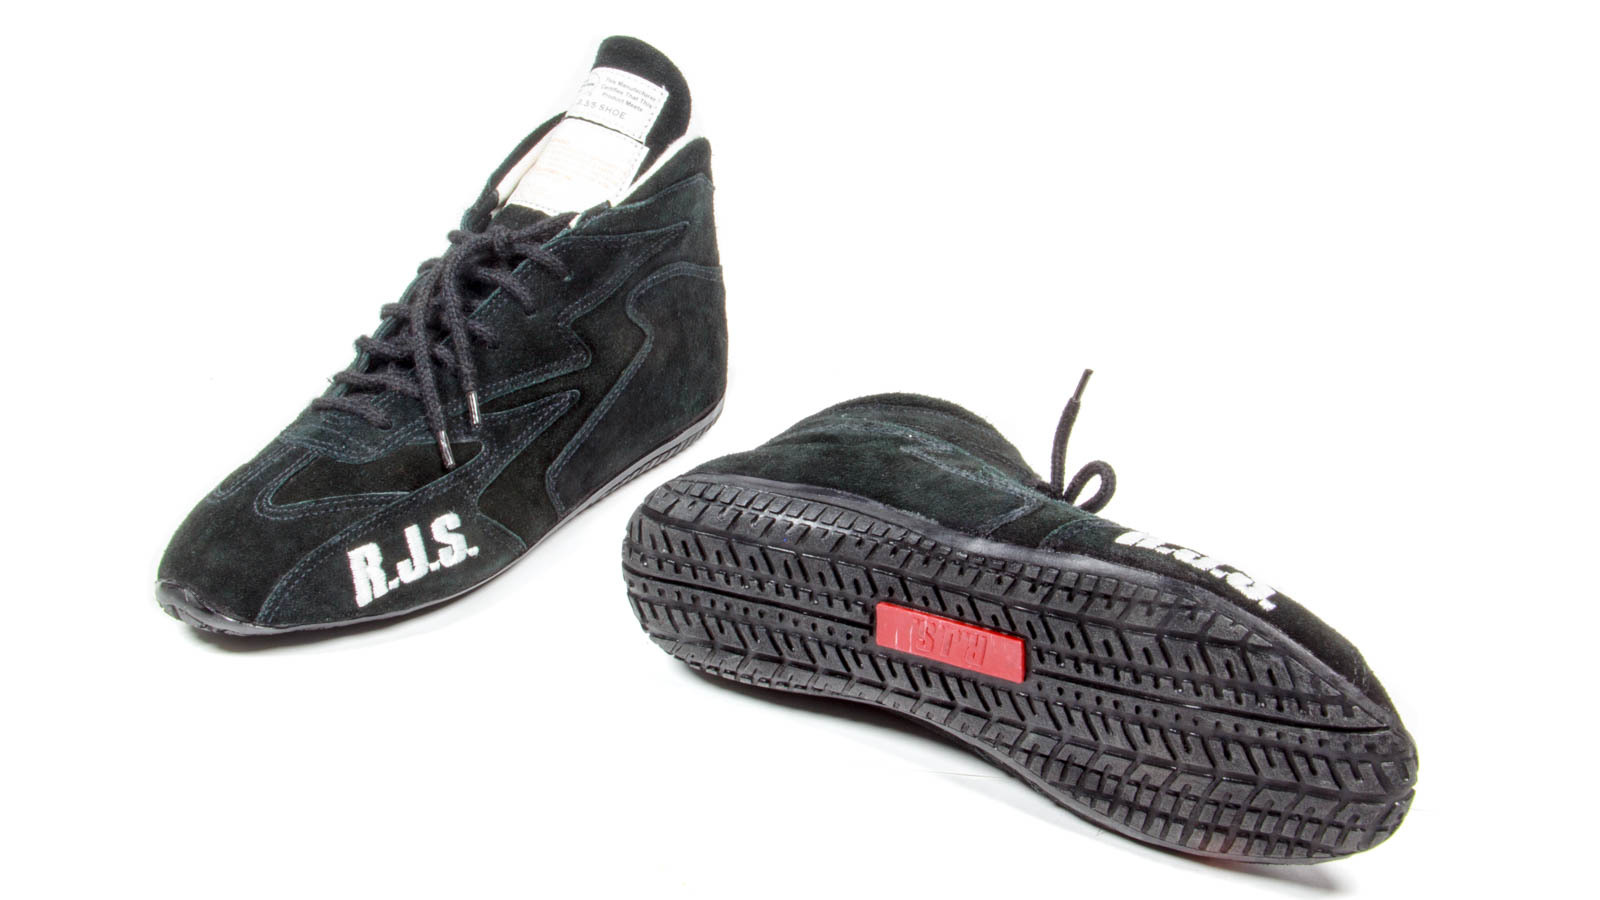 RJS, Redline Racing Shoe Mid-Top Black Size 6 SFI-5